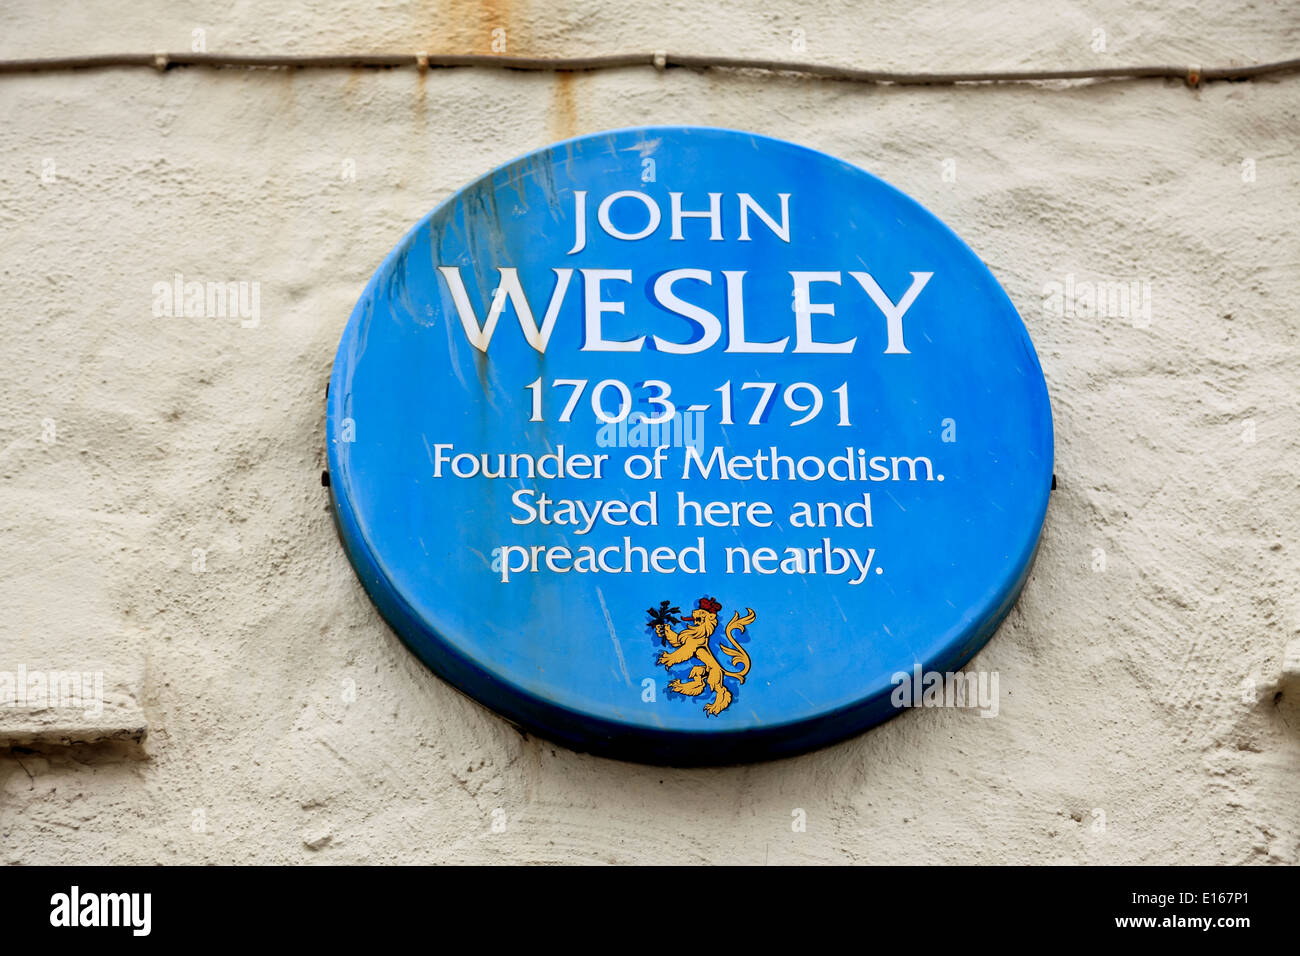 9111. John Wesley blue plaque, Braye Harbour, Alderney, Channel Islands, UK, Europe Stock Photo